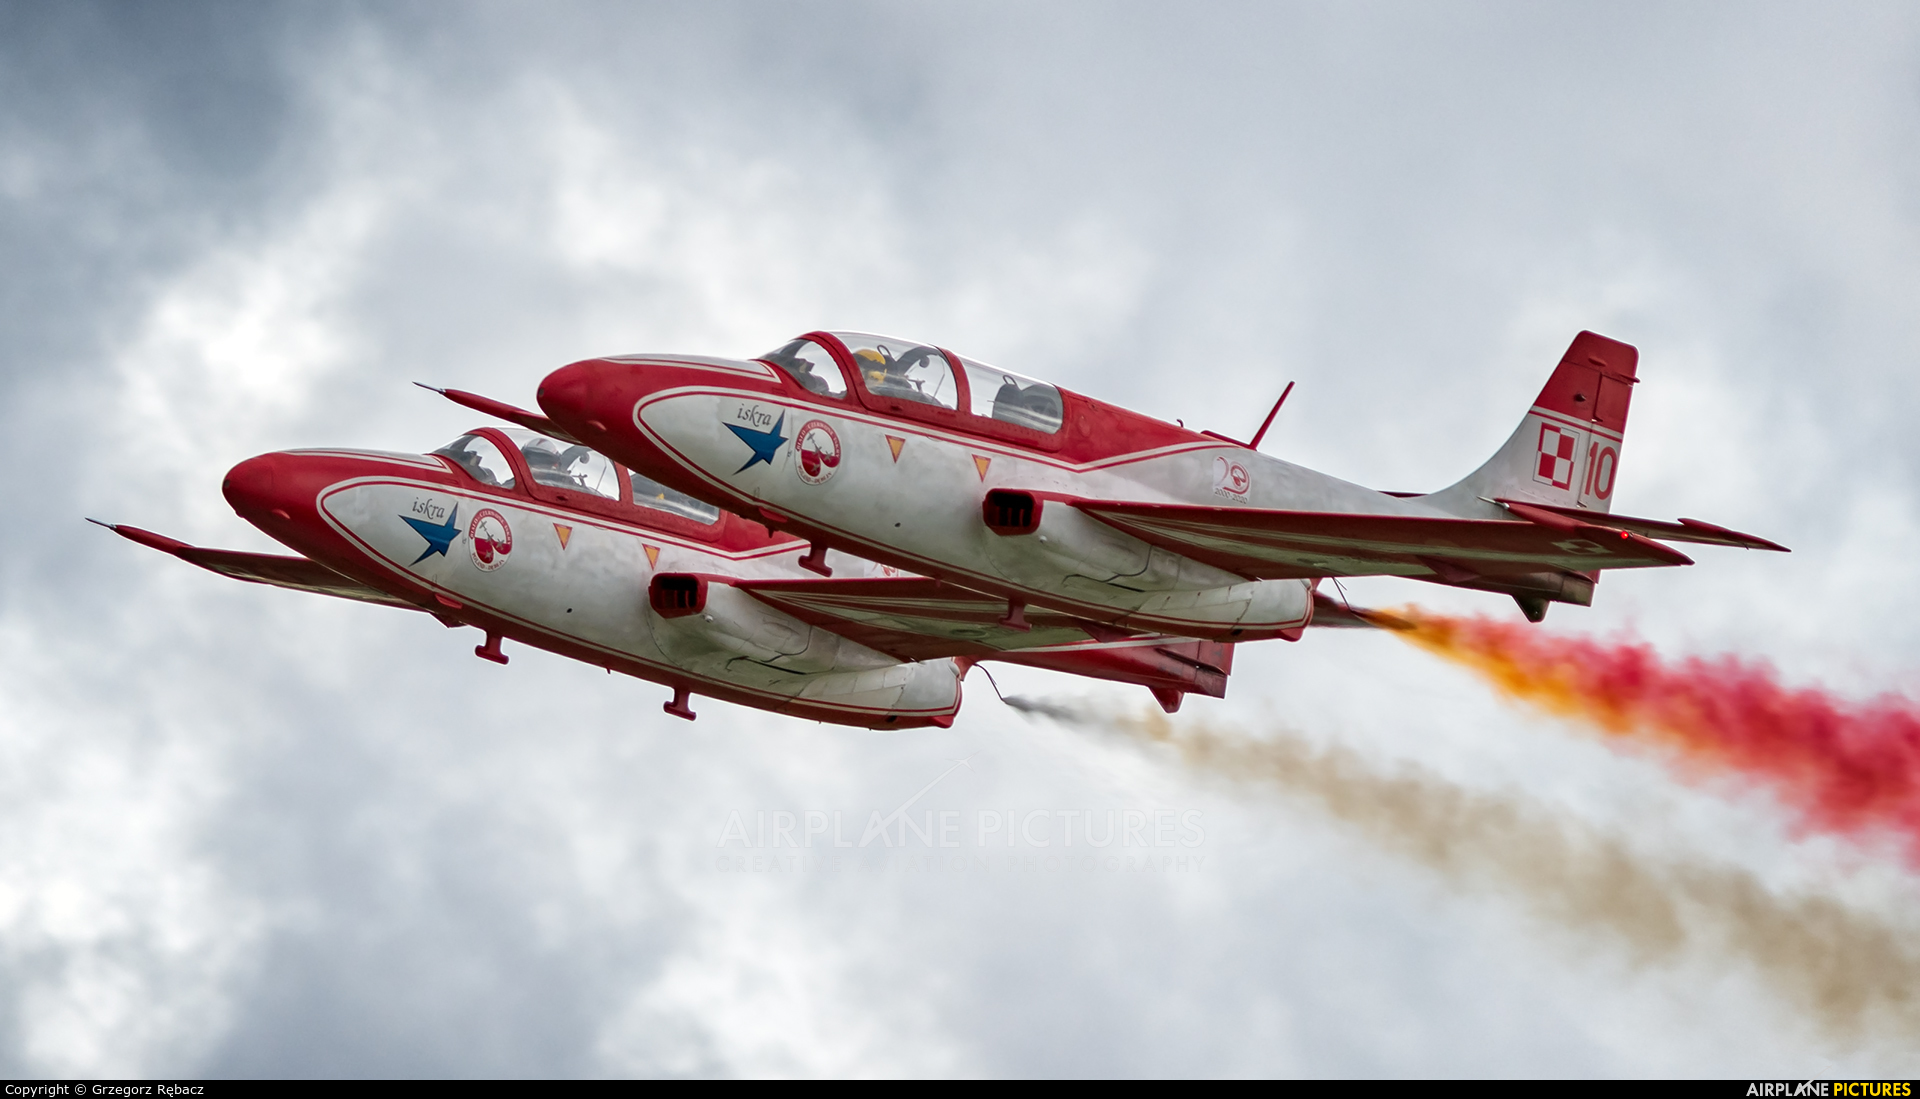 Poland - Air Force: White & Red Iskras 10 aircraft at Gdynia- Babie Doły (Oksywie)